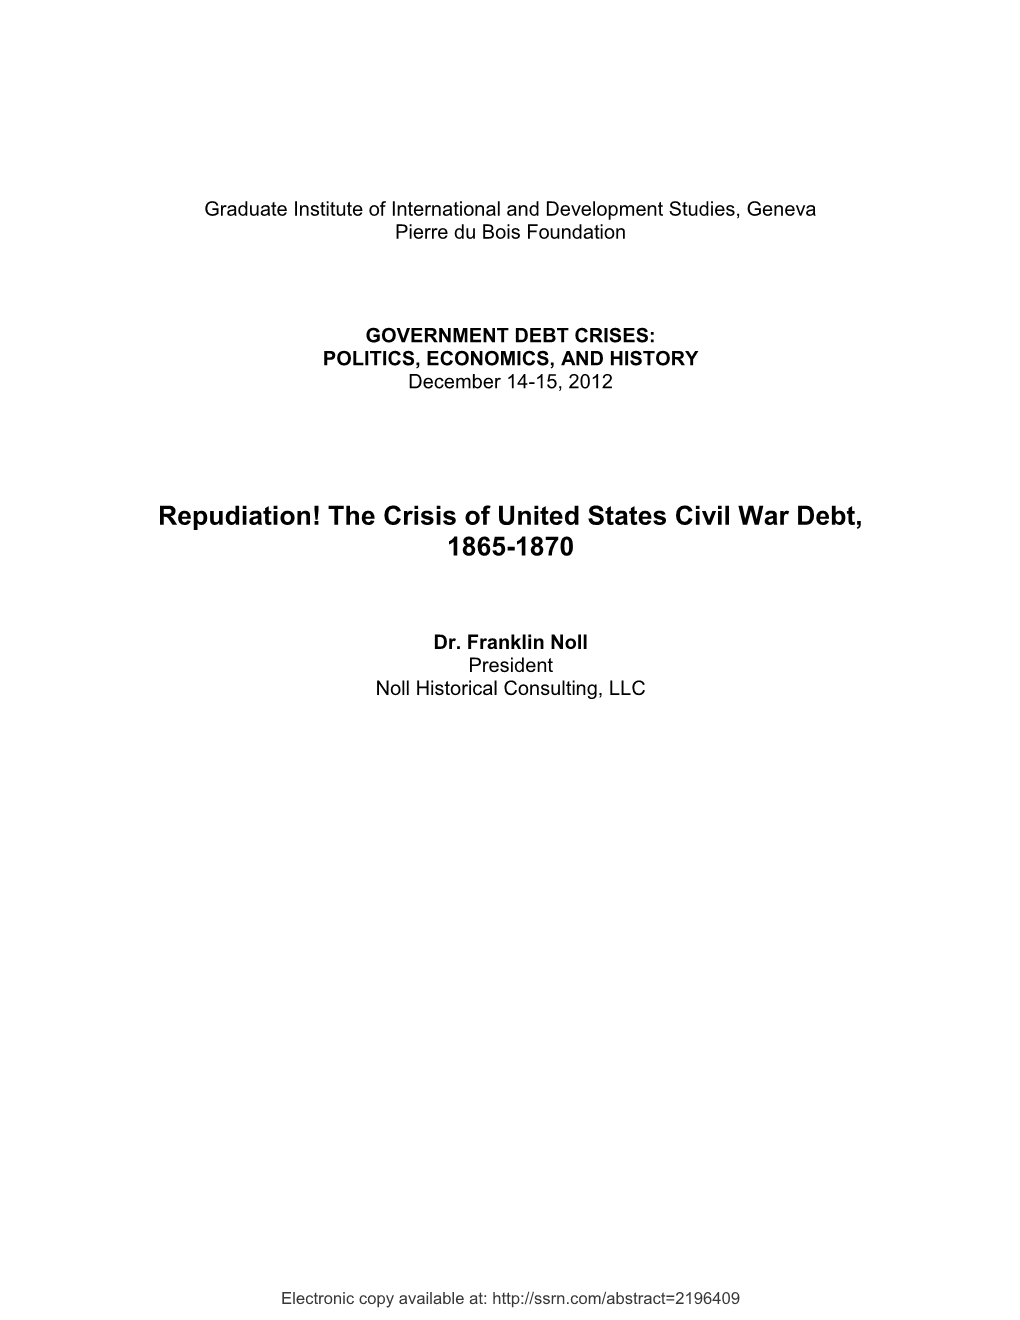 Repudiation! the Crisis of United States Civil War Debt, 1865-1870